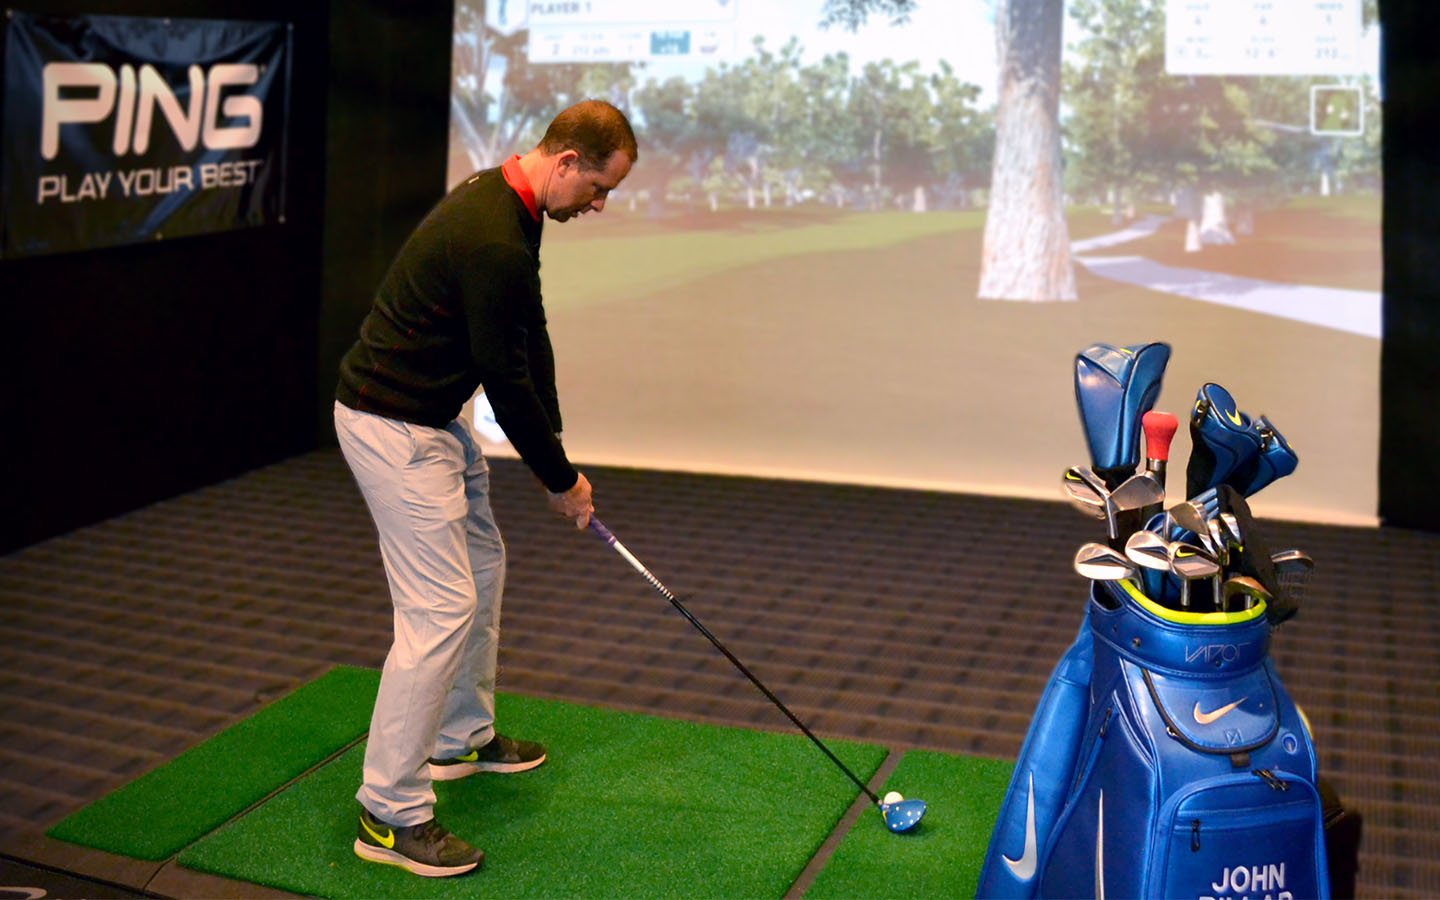 Golfer preparing to swing in performance studio.